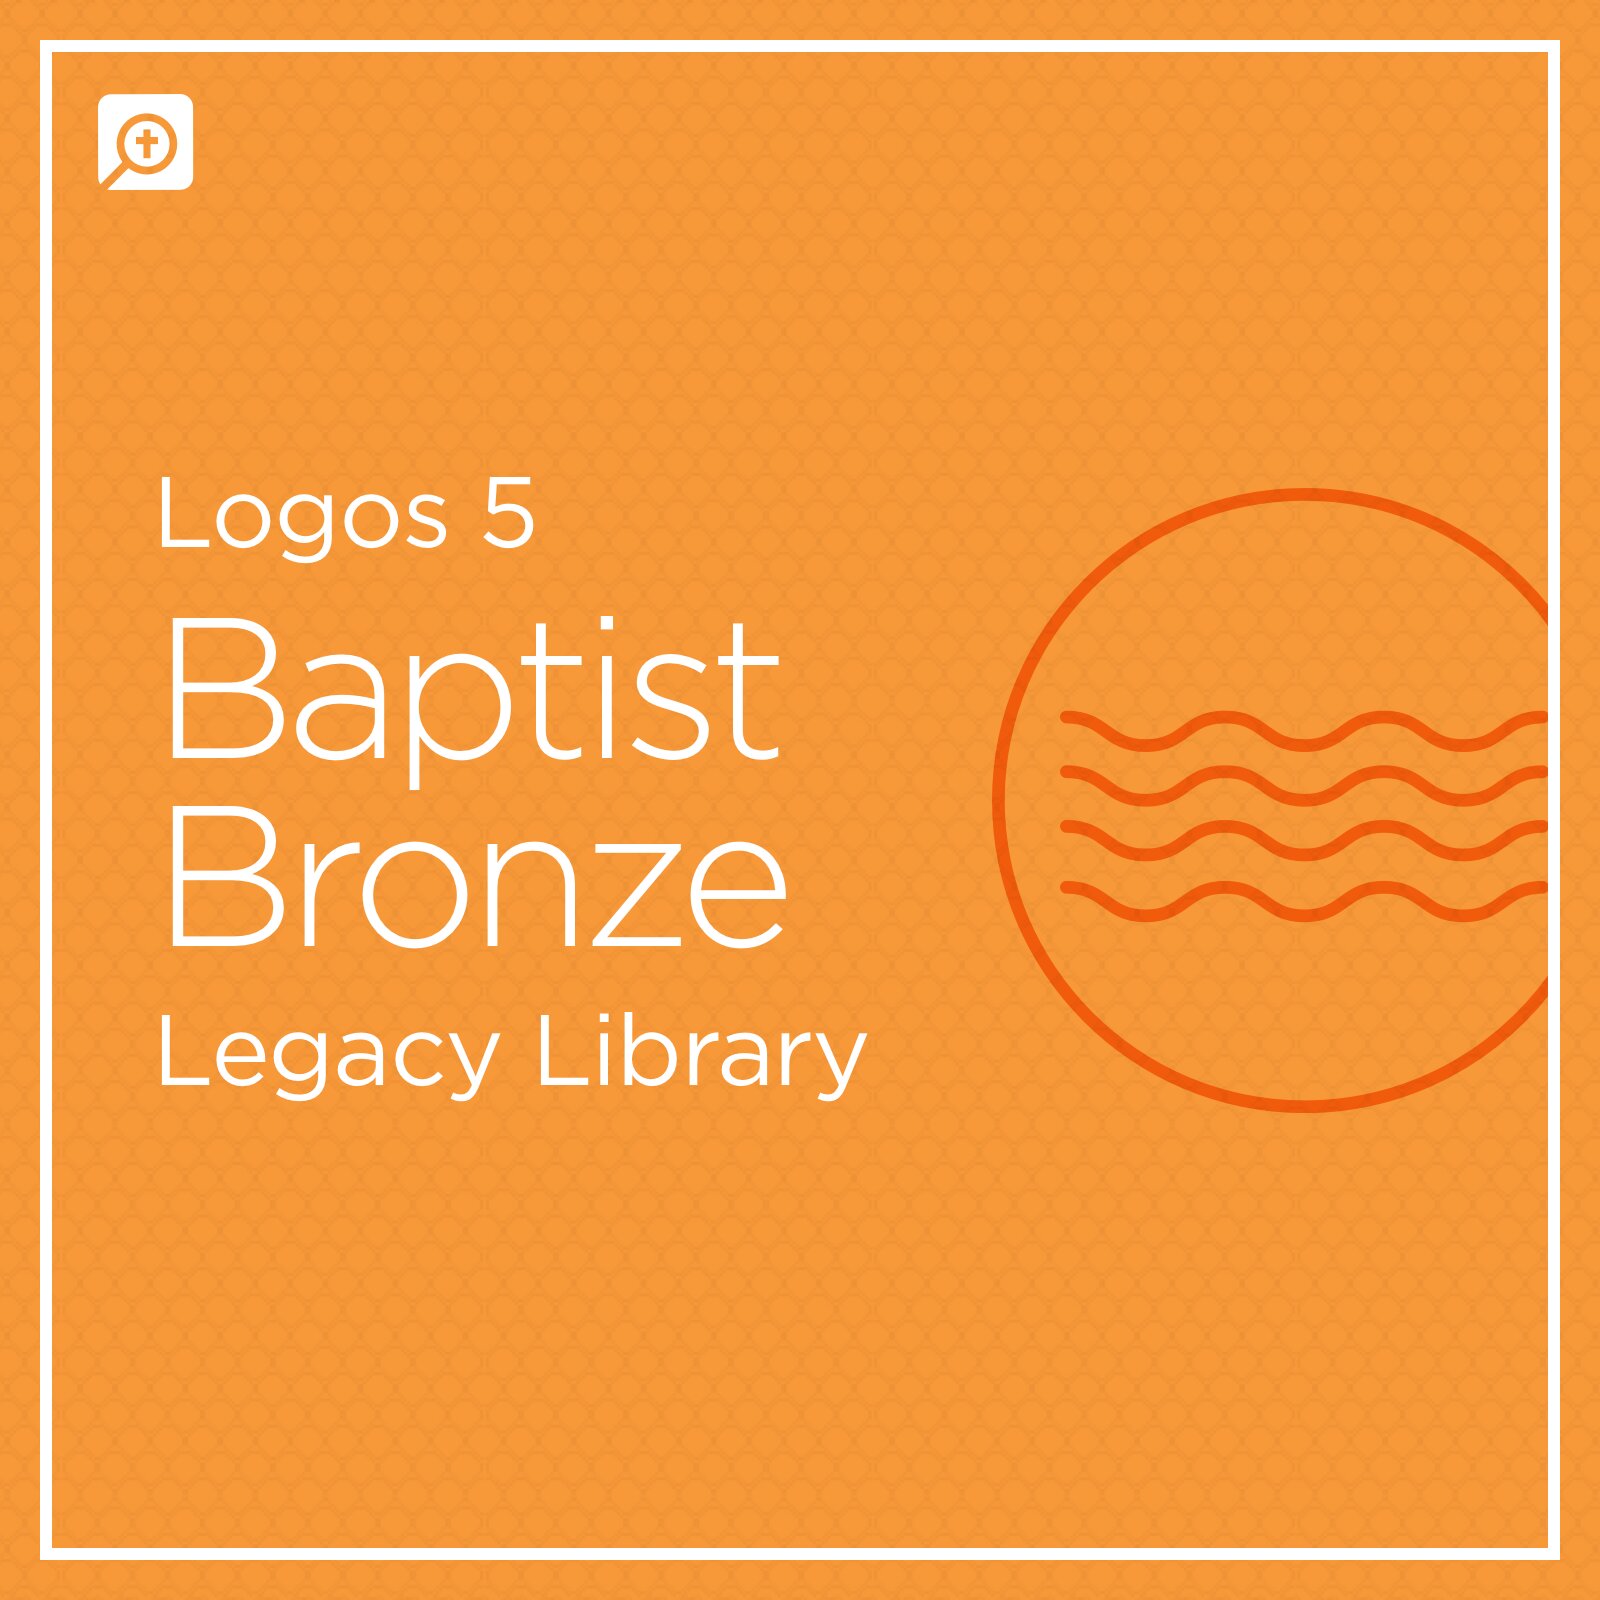 Logos 5 Baptist Bronze Legacy Library